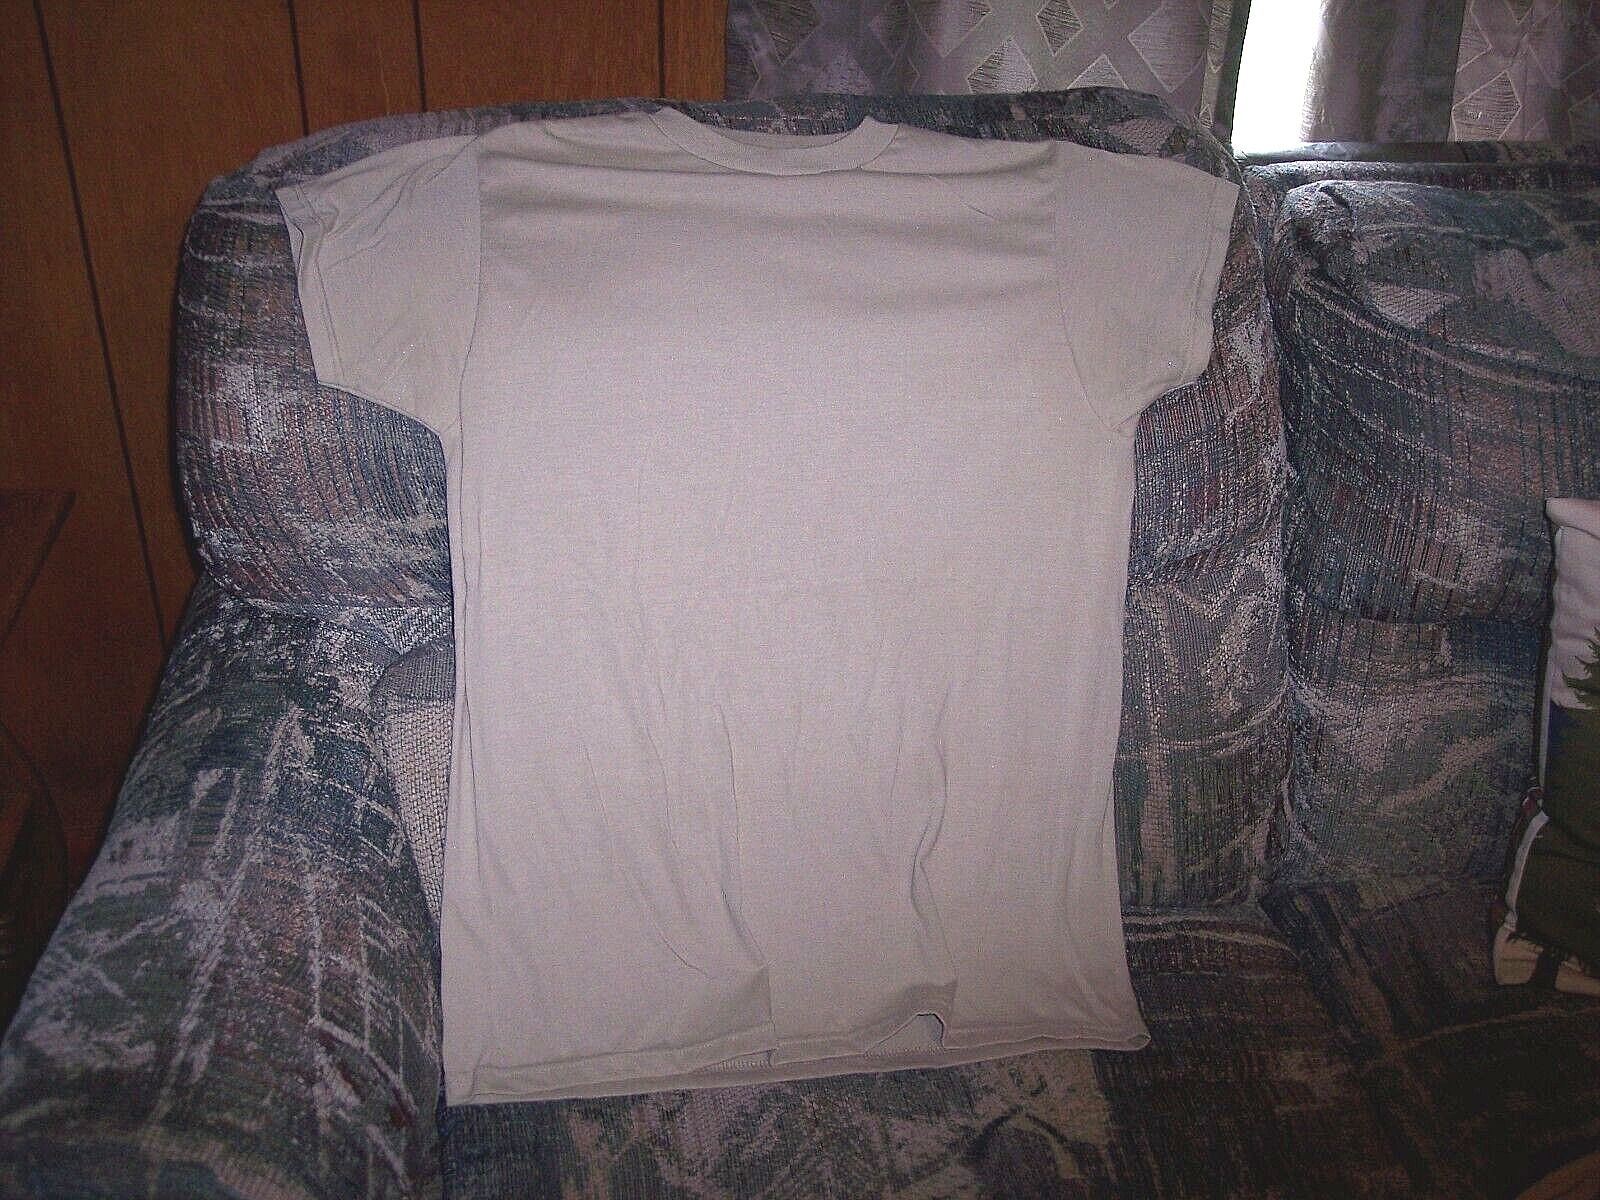 5 Military Shirts Desert Storm Shirt Army T shirt Lot Tan Work Shirt Medium